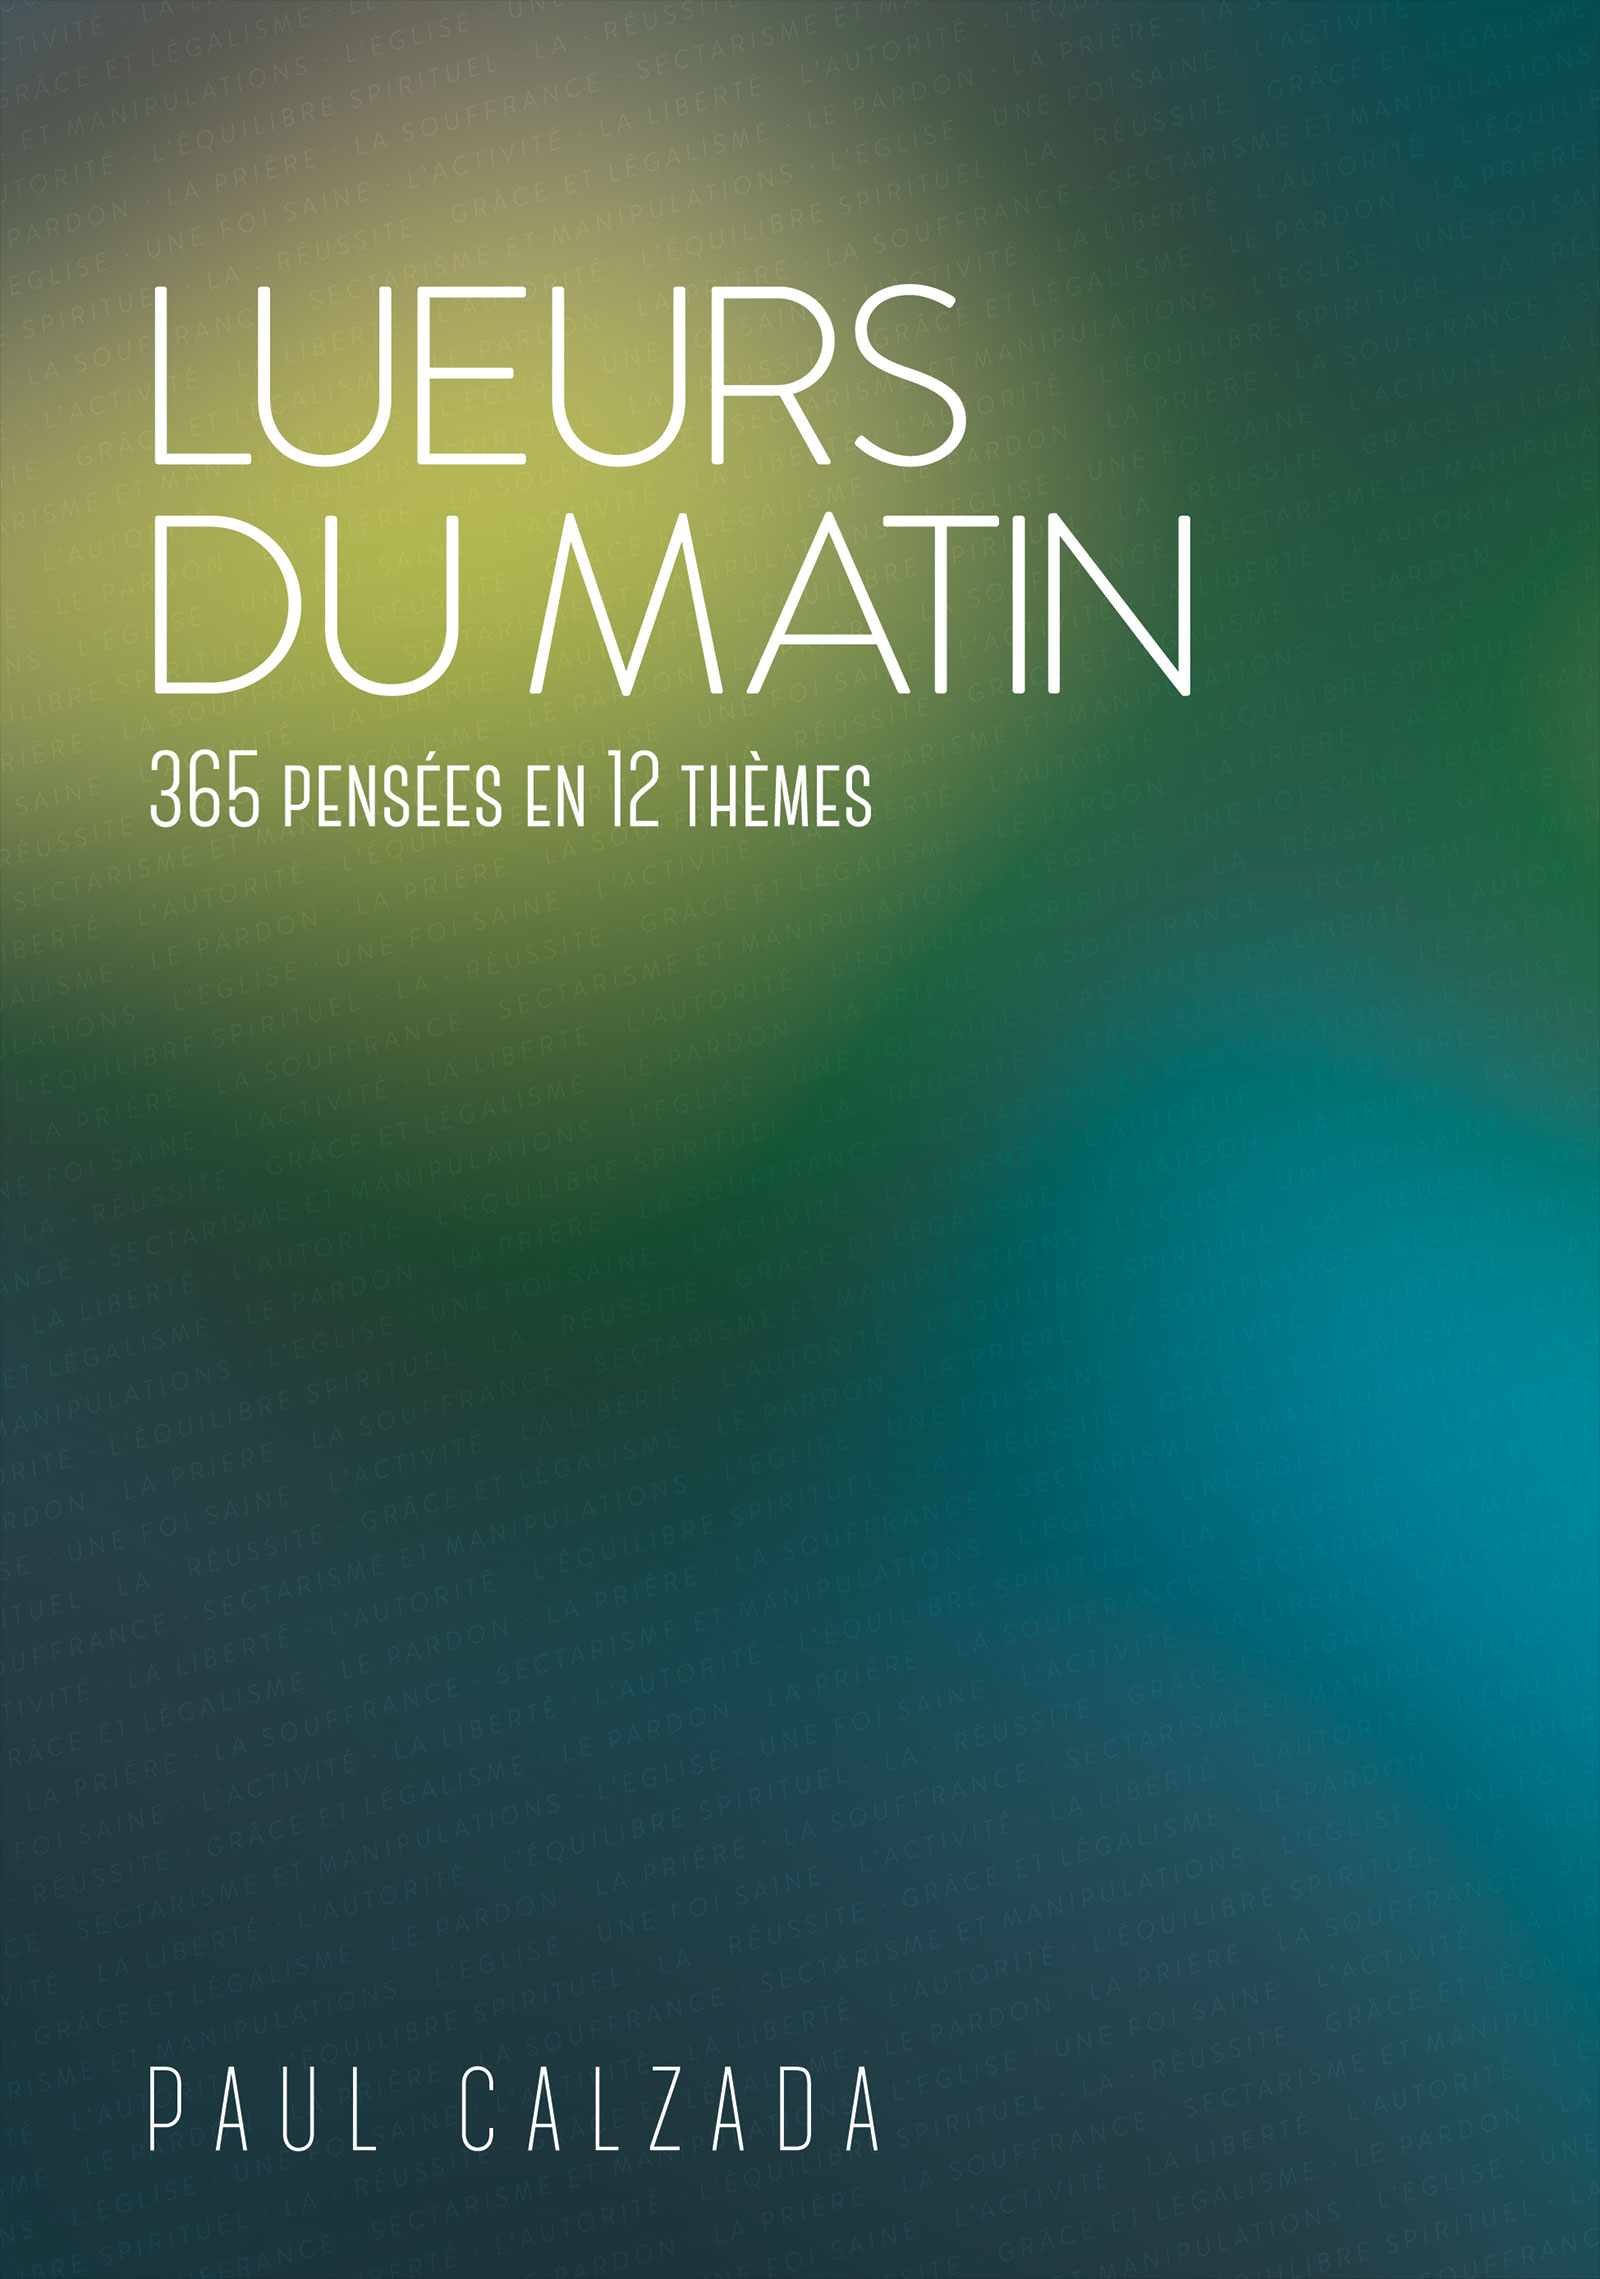 sublime-digital_lueurs-matin-book-cover-01